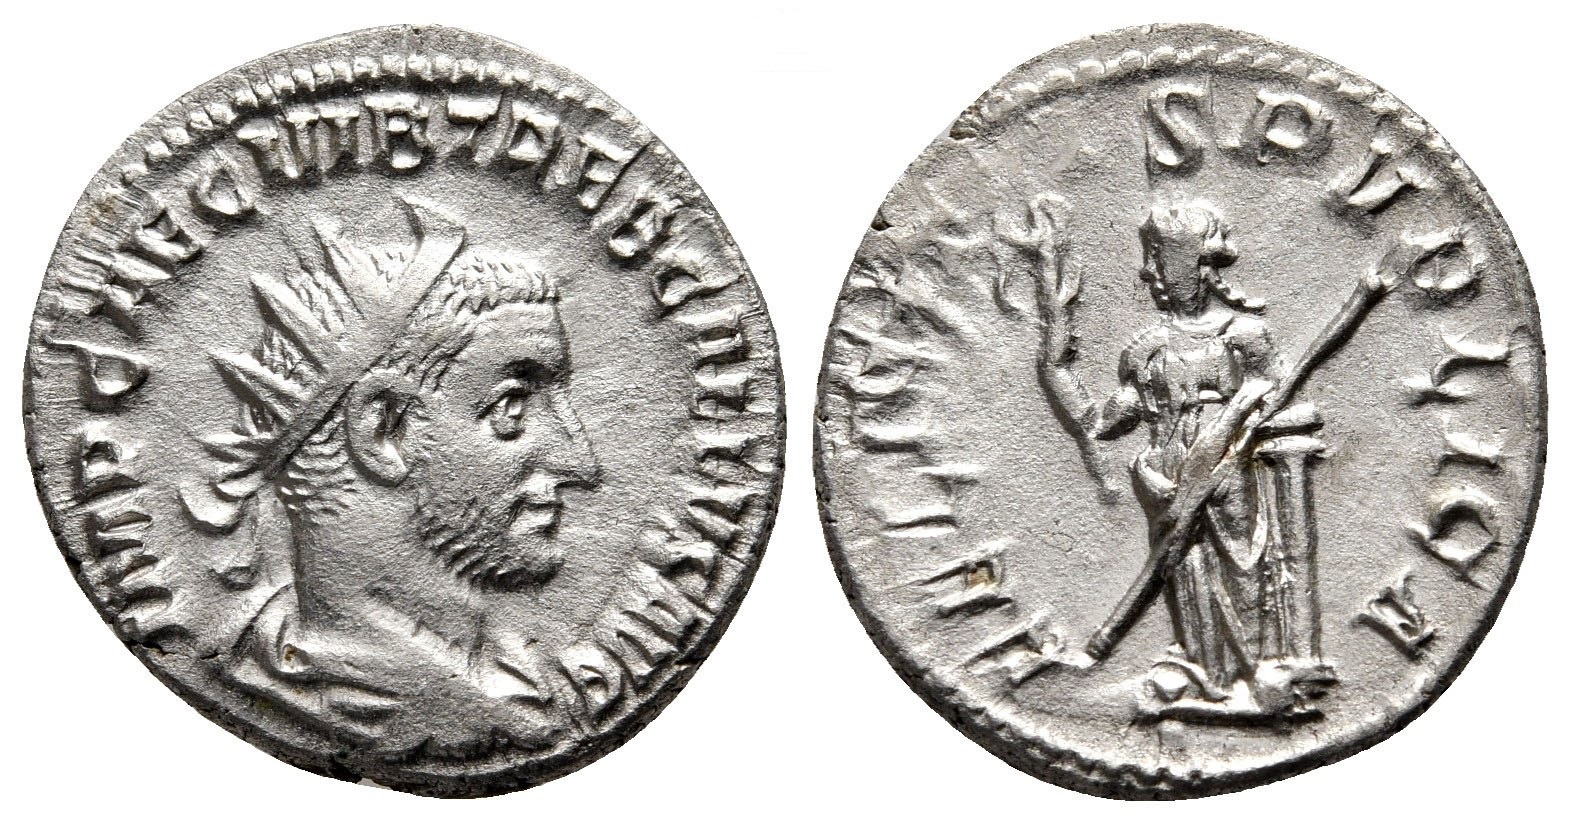 Trebonianus Gallus FELICITAS PVBLICA leaning on column antoninianus Rome.jpg